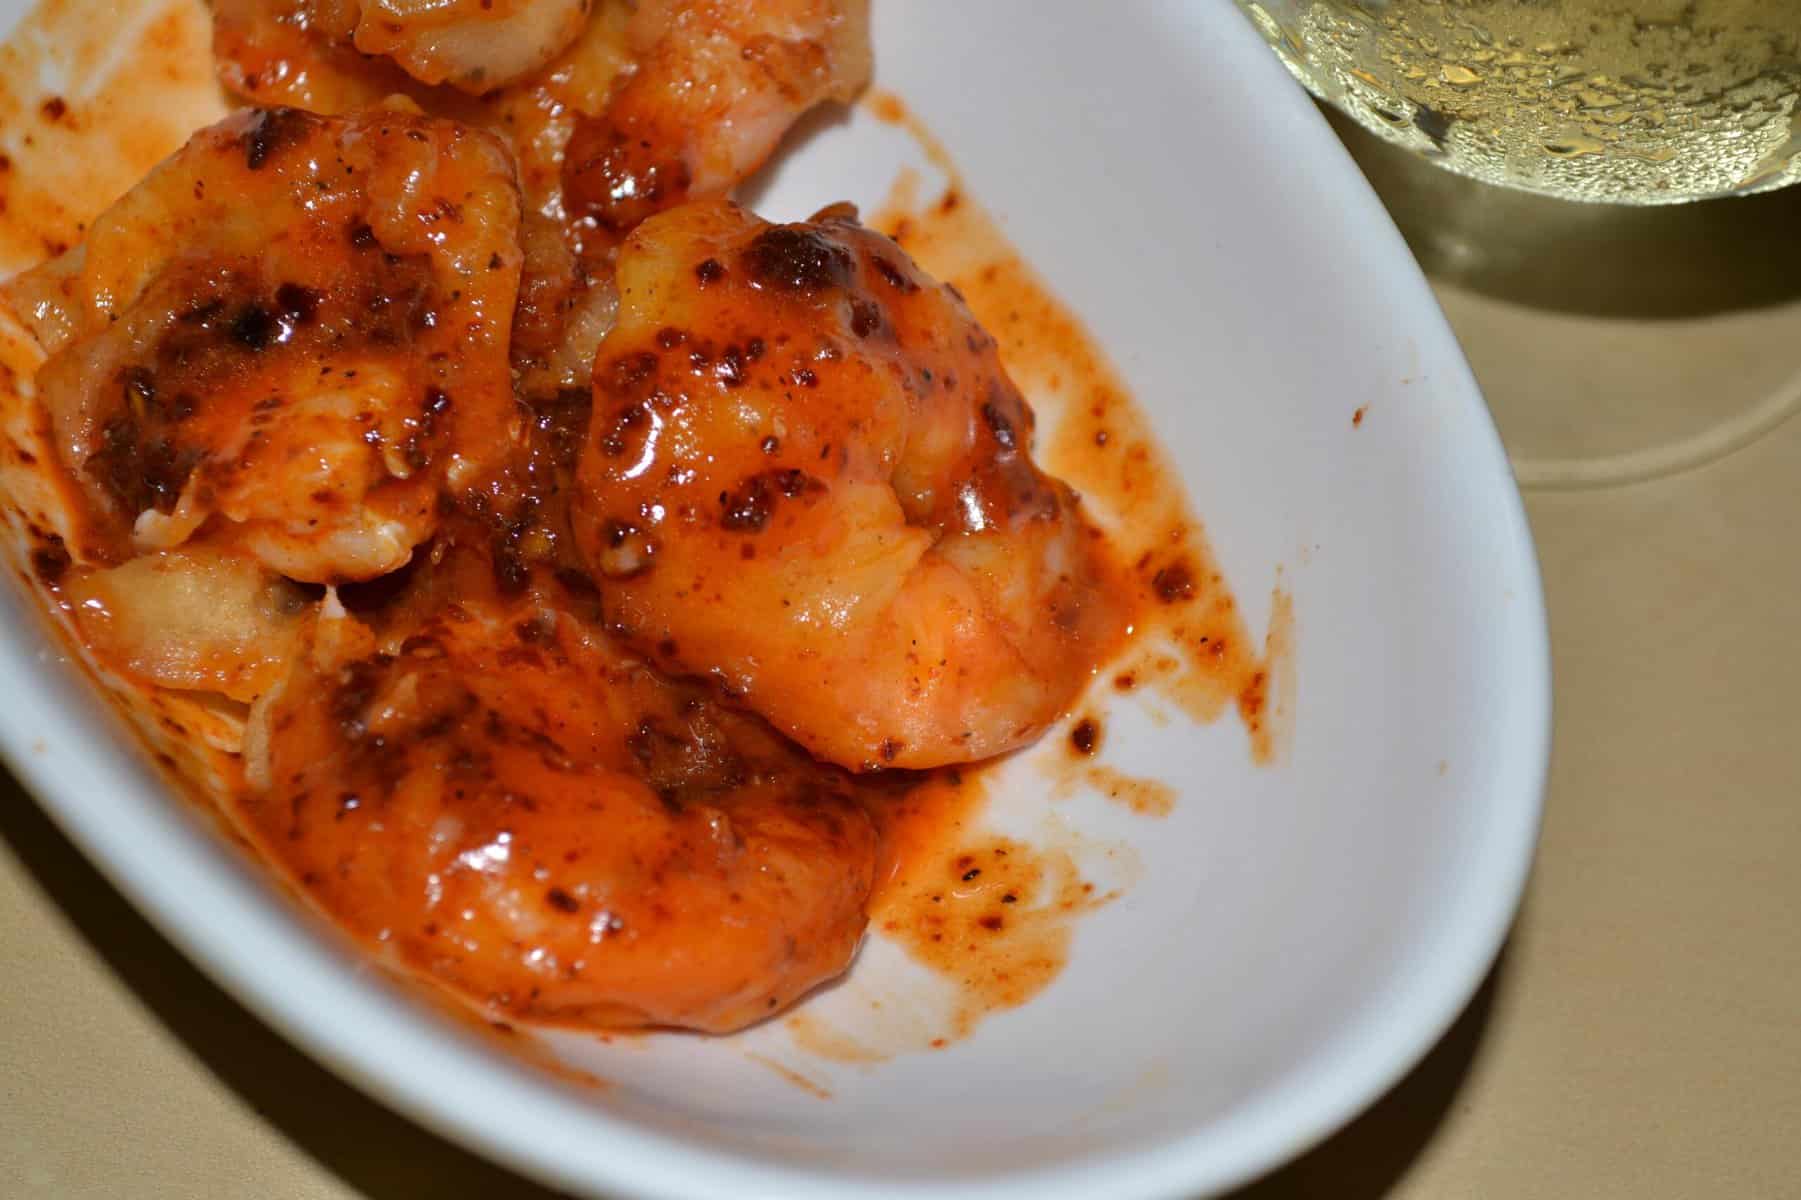  Juicy, succulent shrimp with a spicy kick